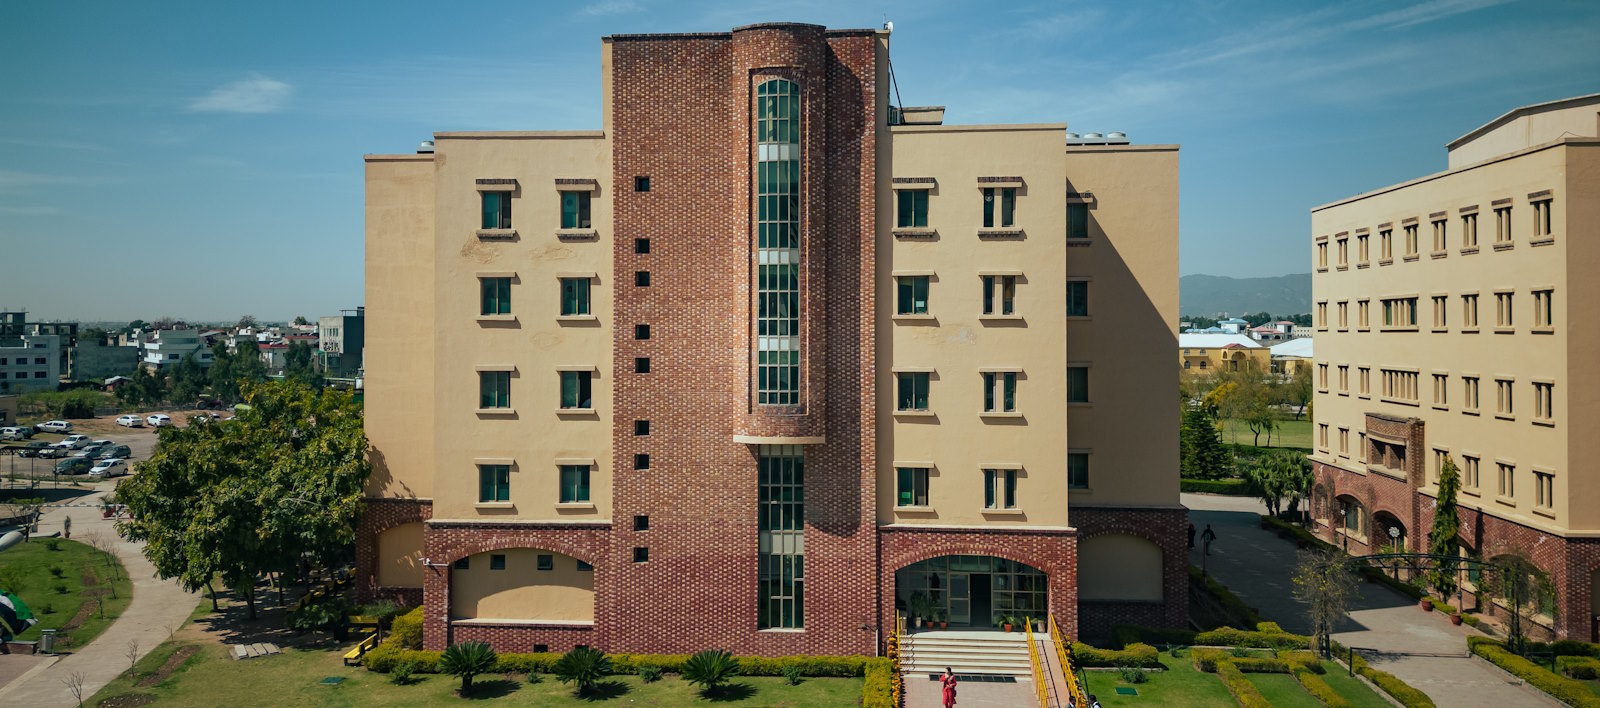 Meteorology Department of CUI Islamabad Campus